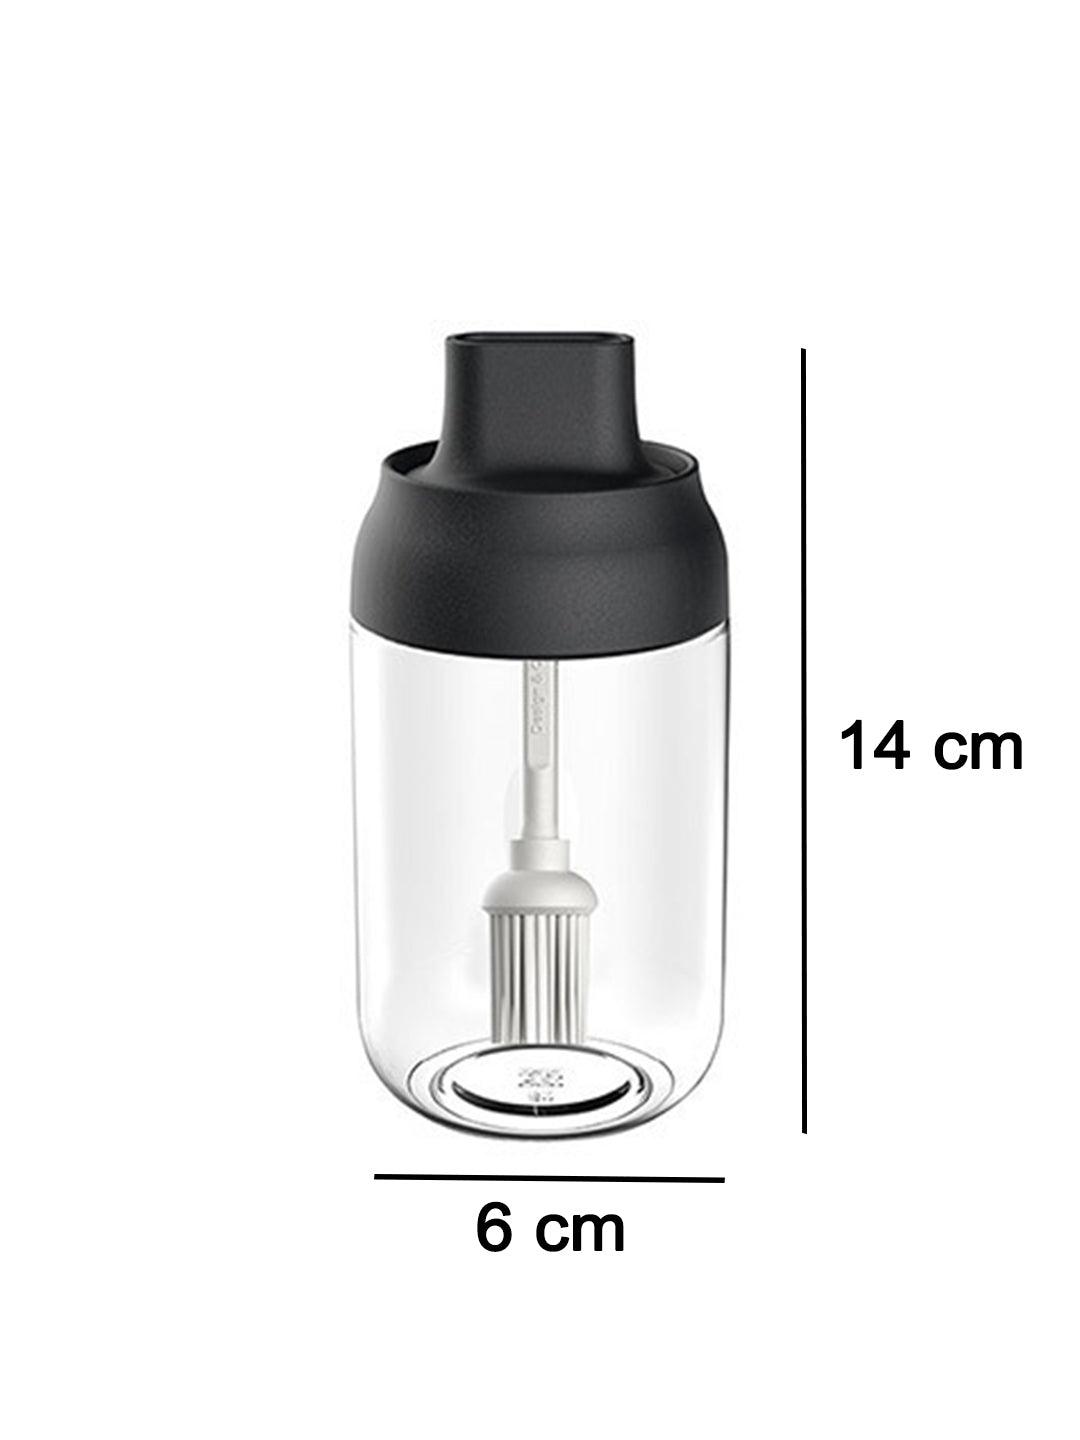 Market99 Cylindrical Glass Jar - MARKET 99